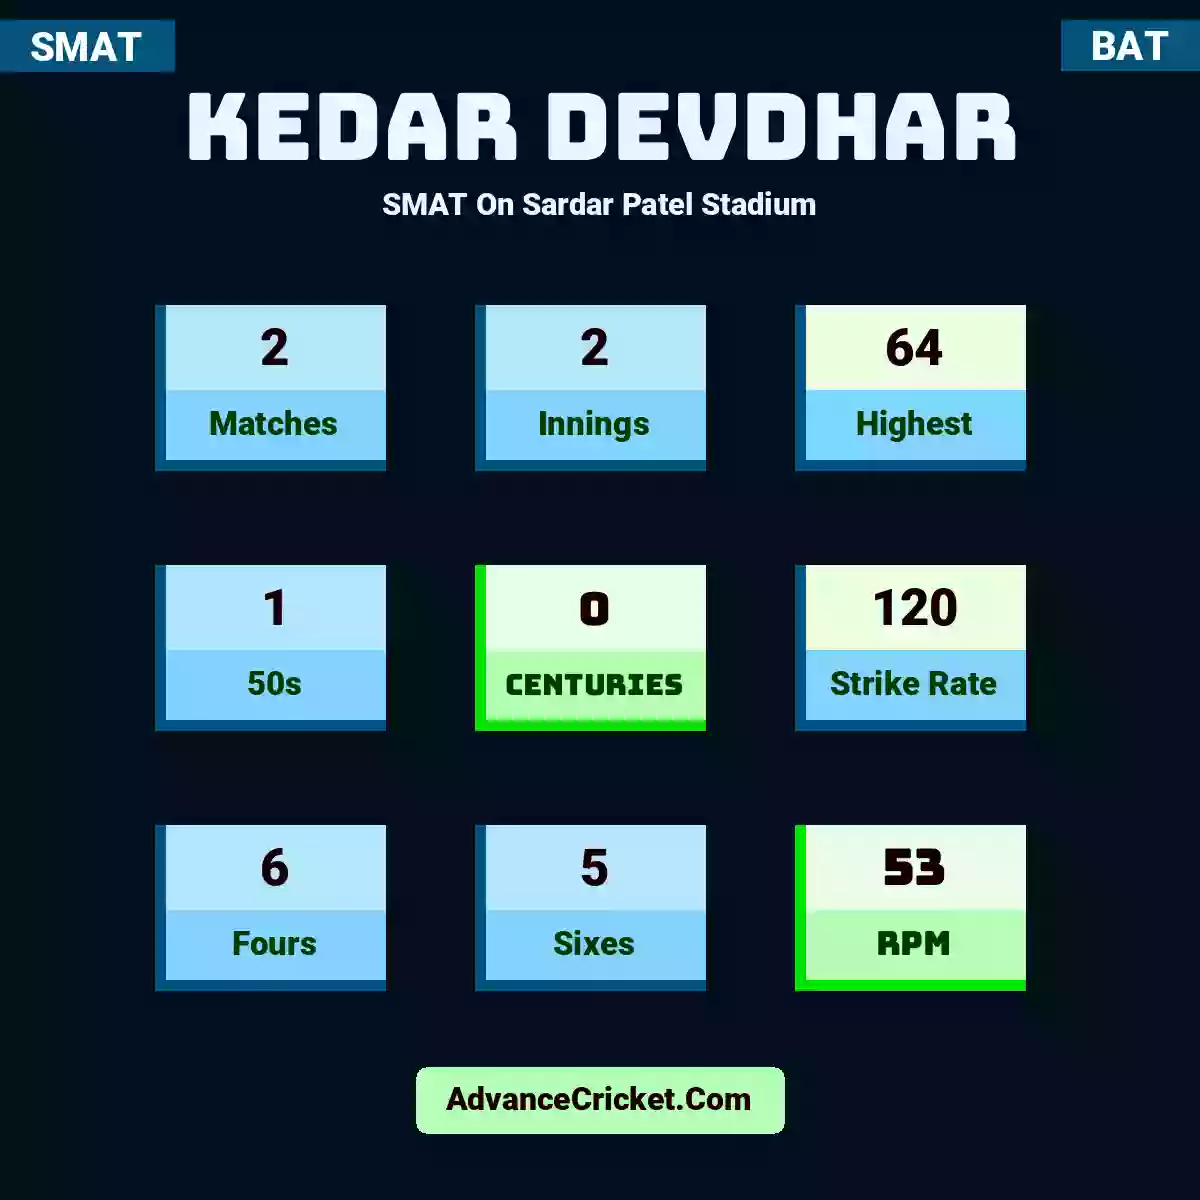 Kedar Devdhar SMAT  On Sardar Patel Stadium, Kedar Devdhar played 2 matches, scored 64 runs as highest, 1 half-centuries, and 0 centuries, with a strike rate of 120. K.Devdhar hit 6 fours and 5 sixes, with an RPM of 53.